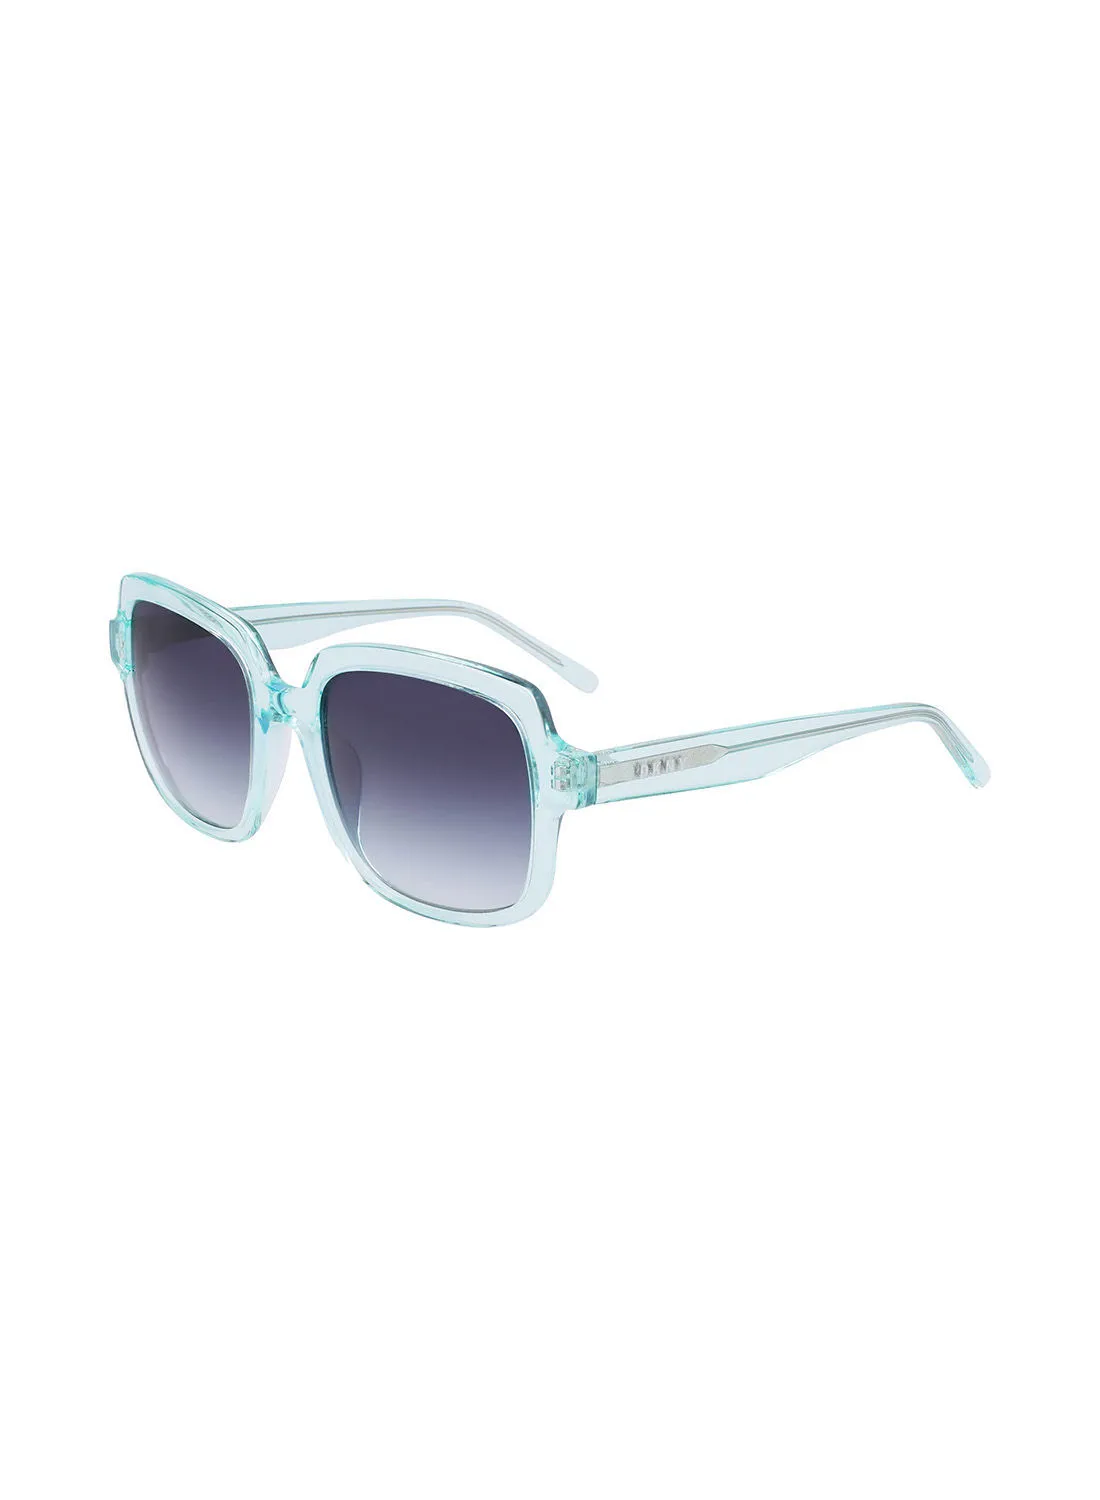 DKNY Full Rim Acetate Square Sunglasses Dk540S 5419 (450)